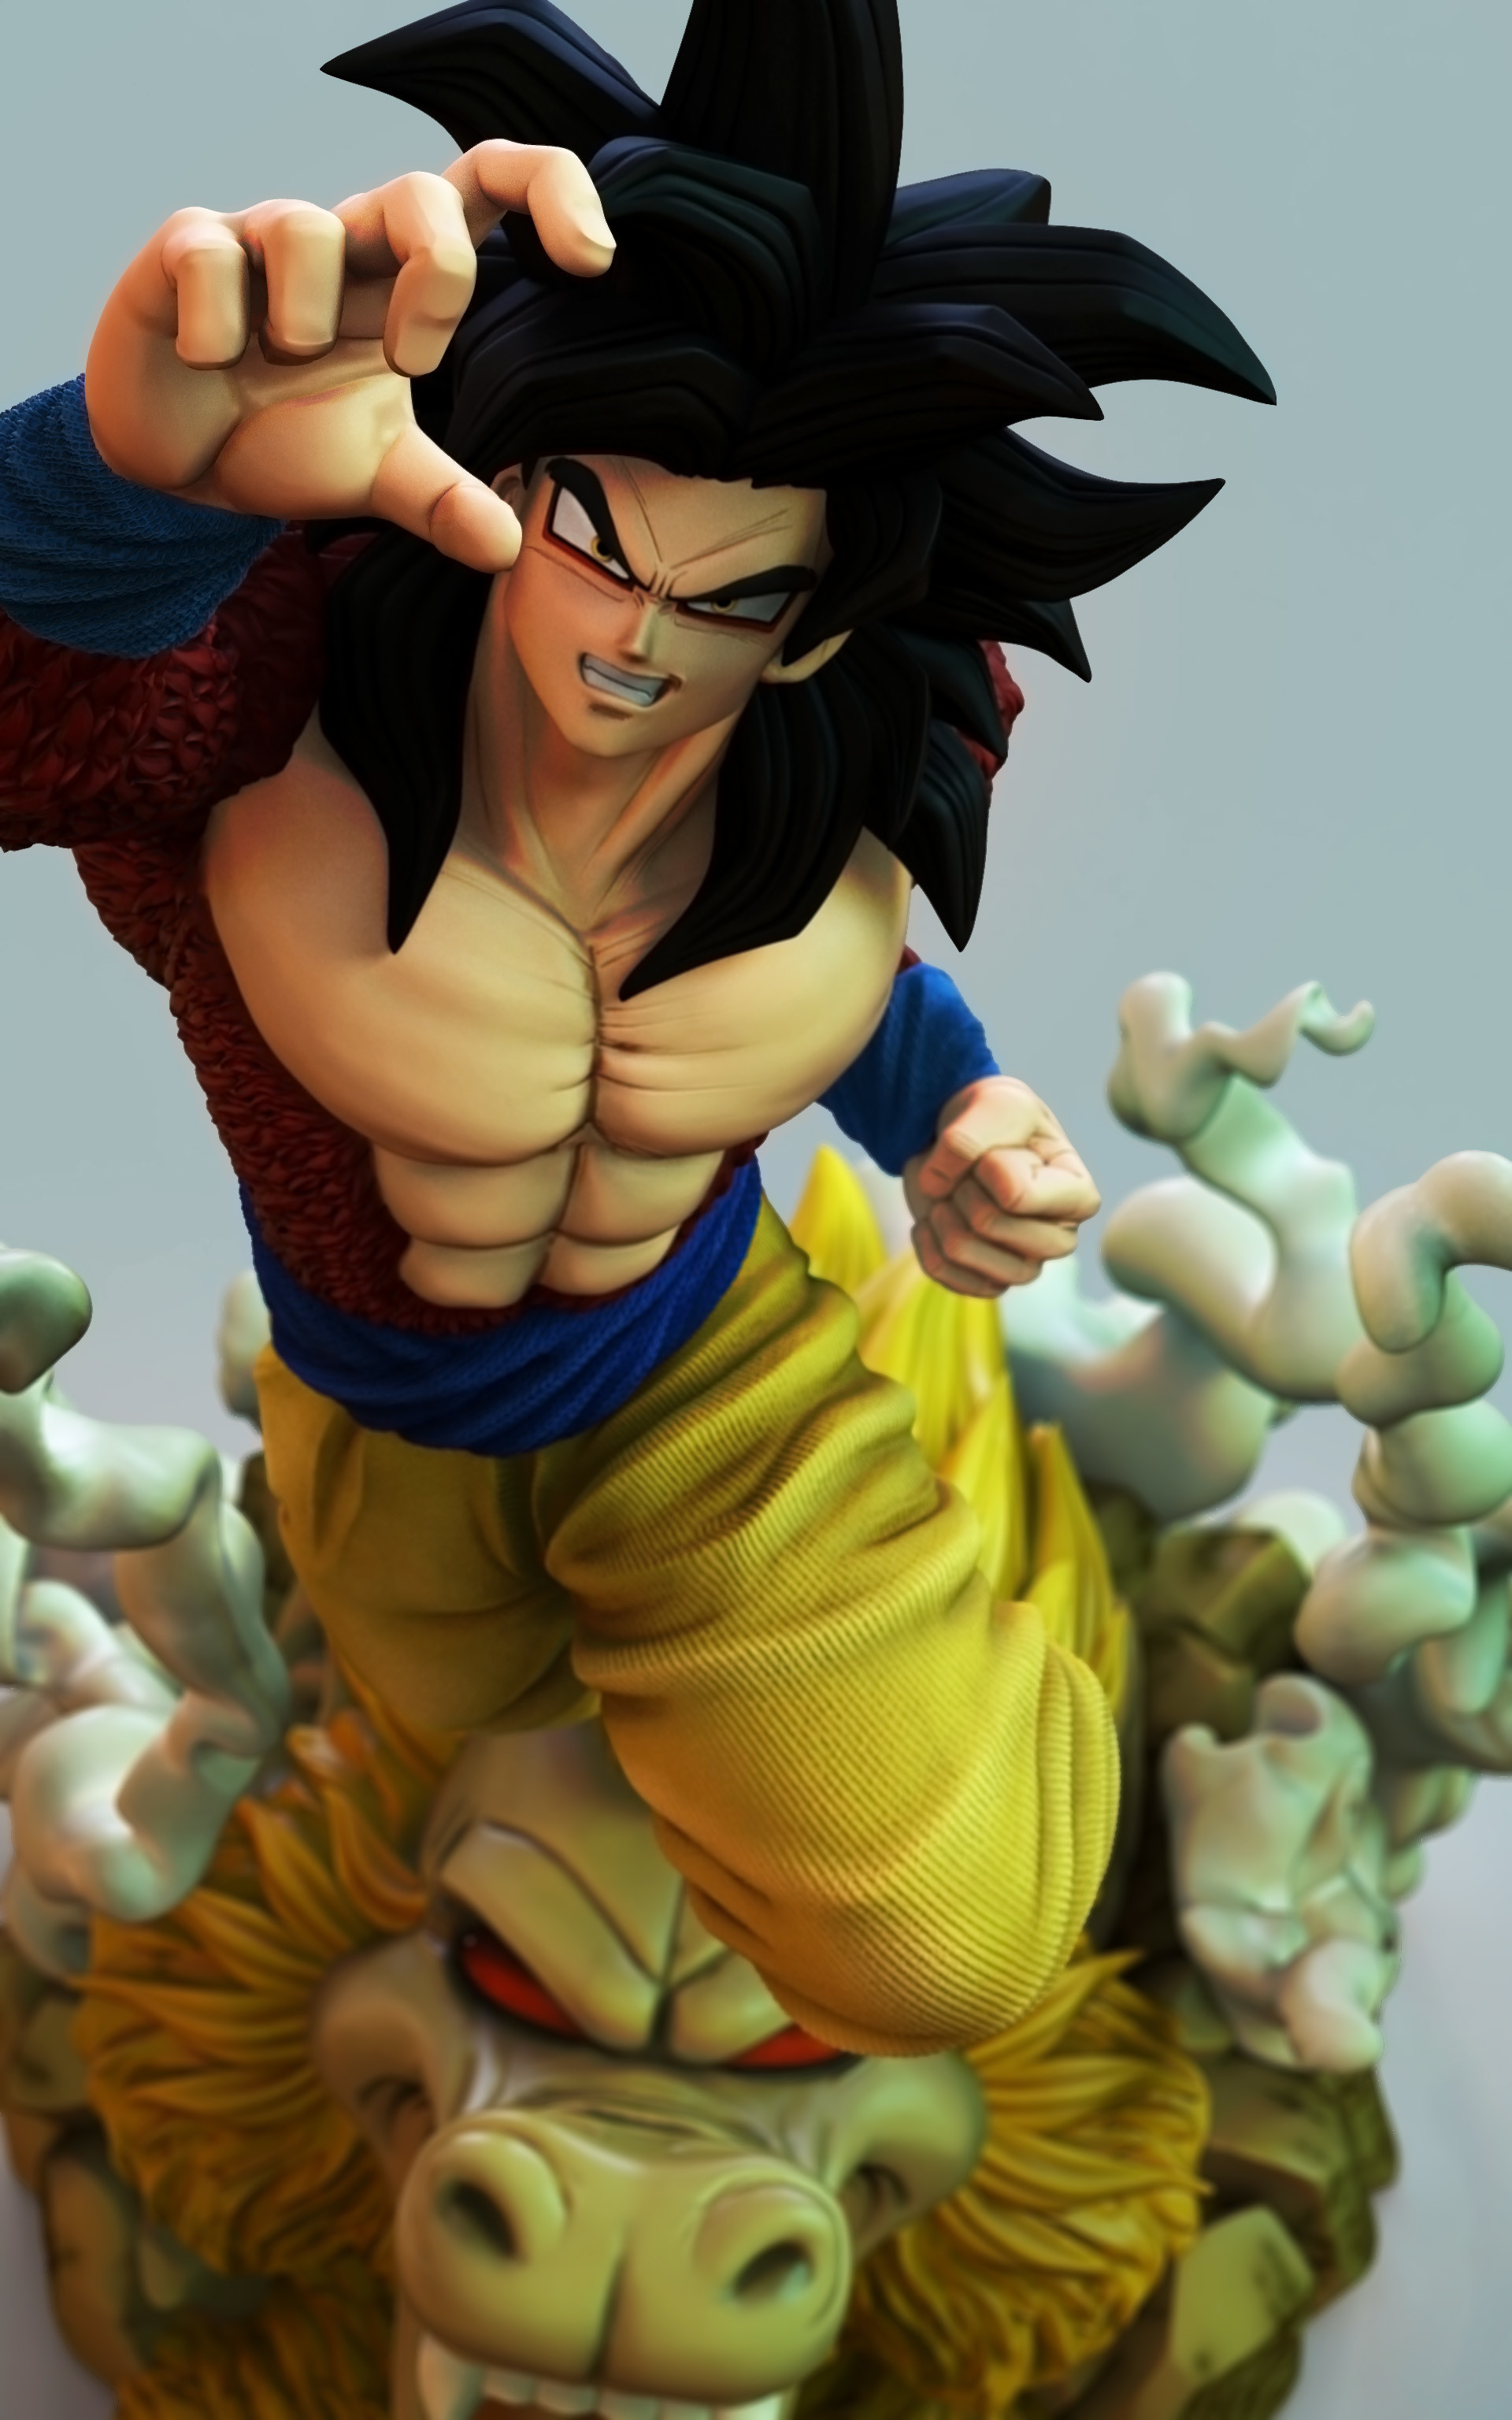 ArtStation - Goku super saiyan 4